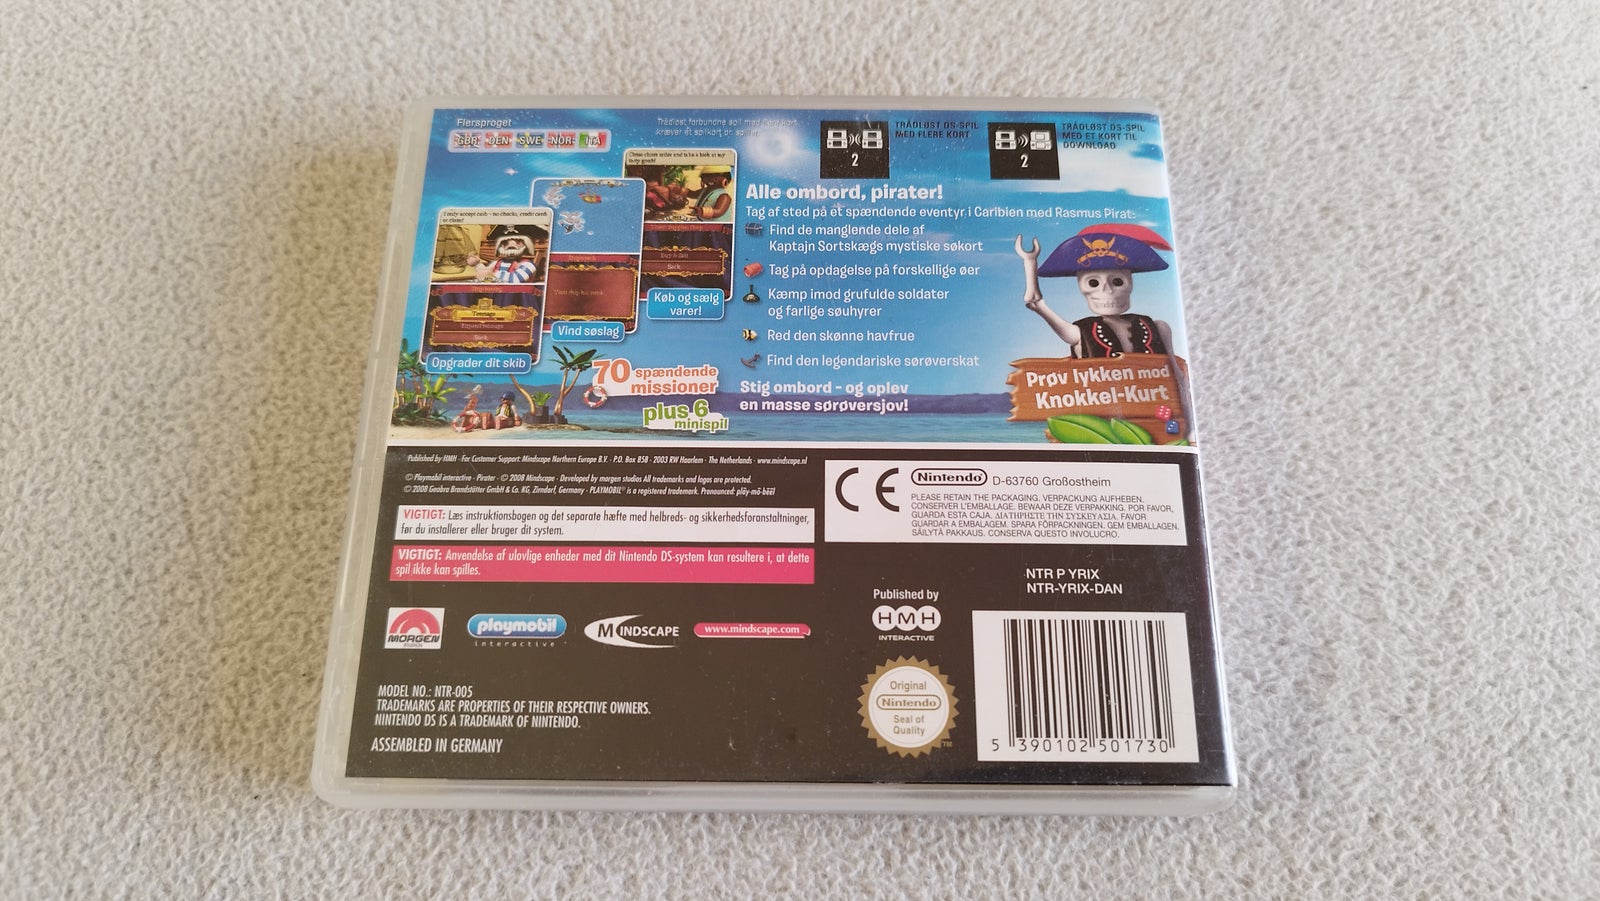 Playmobil Pirater - Nintendo DS spil, Nintendo DS